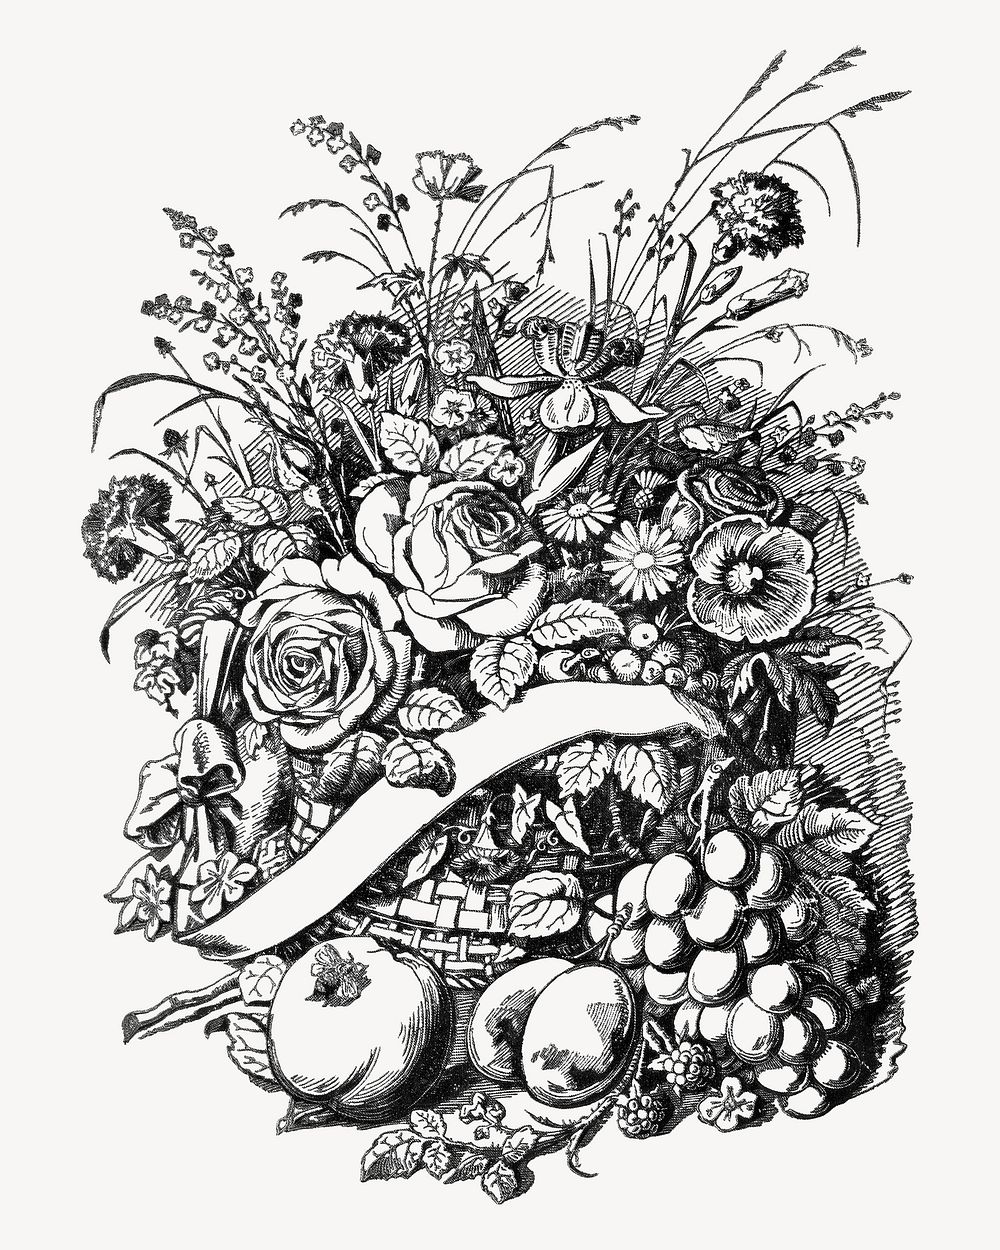 Vintage flowers black & white illustration. Remixed from our own original 1879 edition of Nederlandsche Flora en Pomona. 